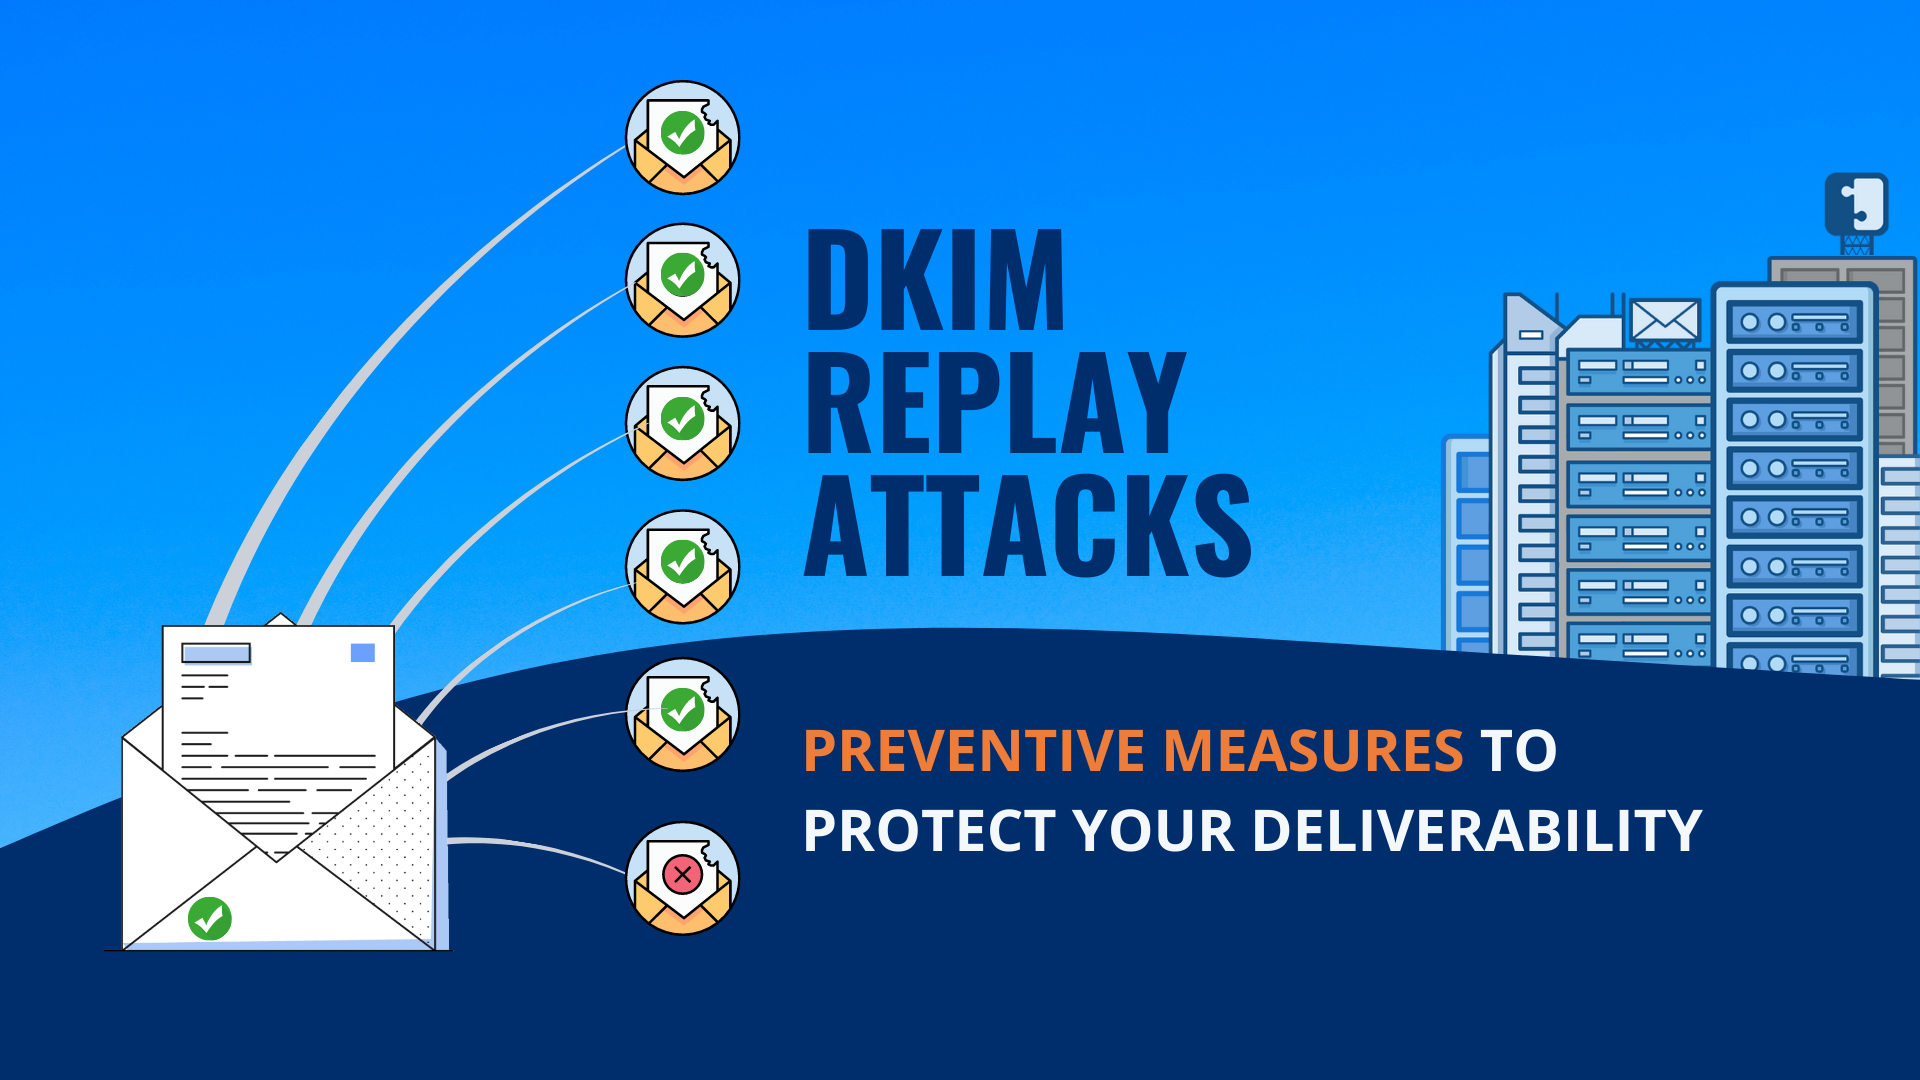 DKIM Replay Attacks